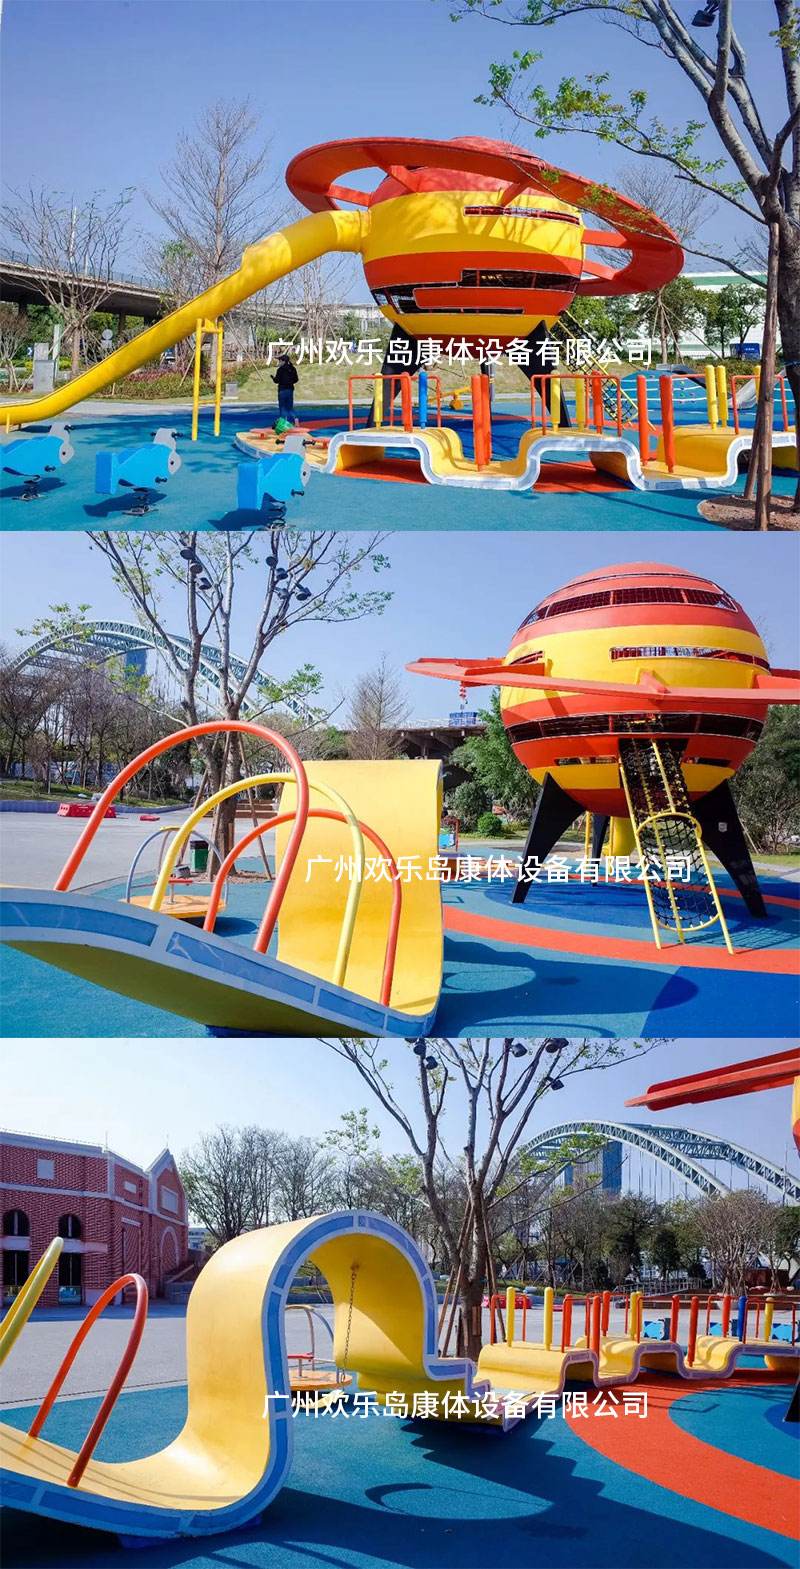 Playground for kids - Playground Equipment for Children